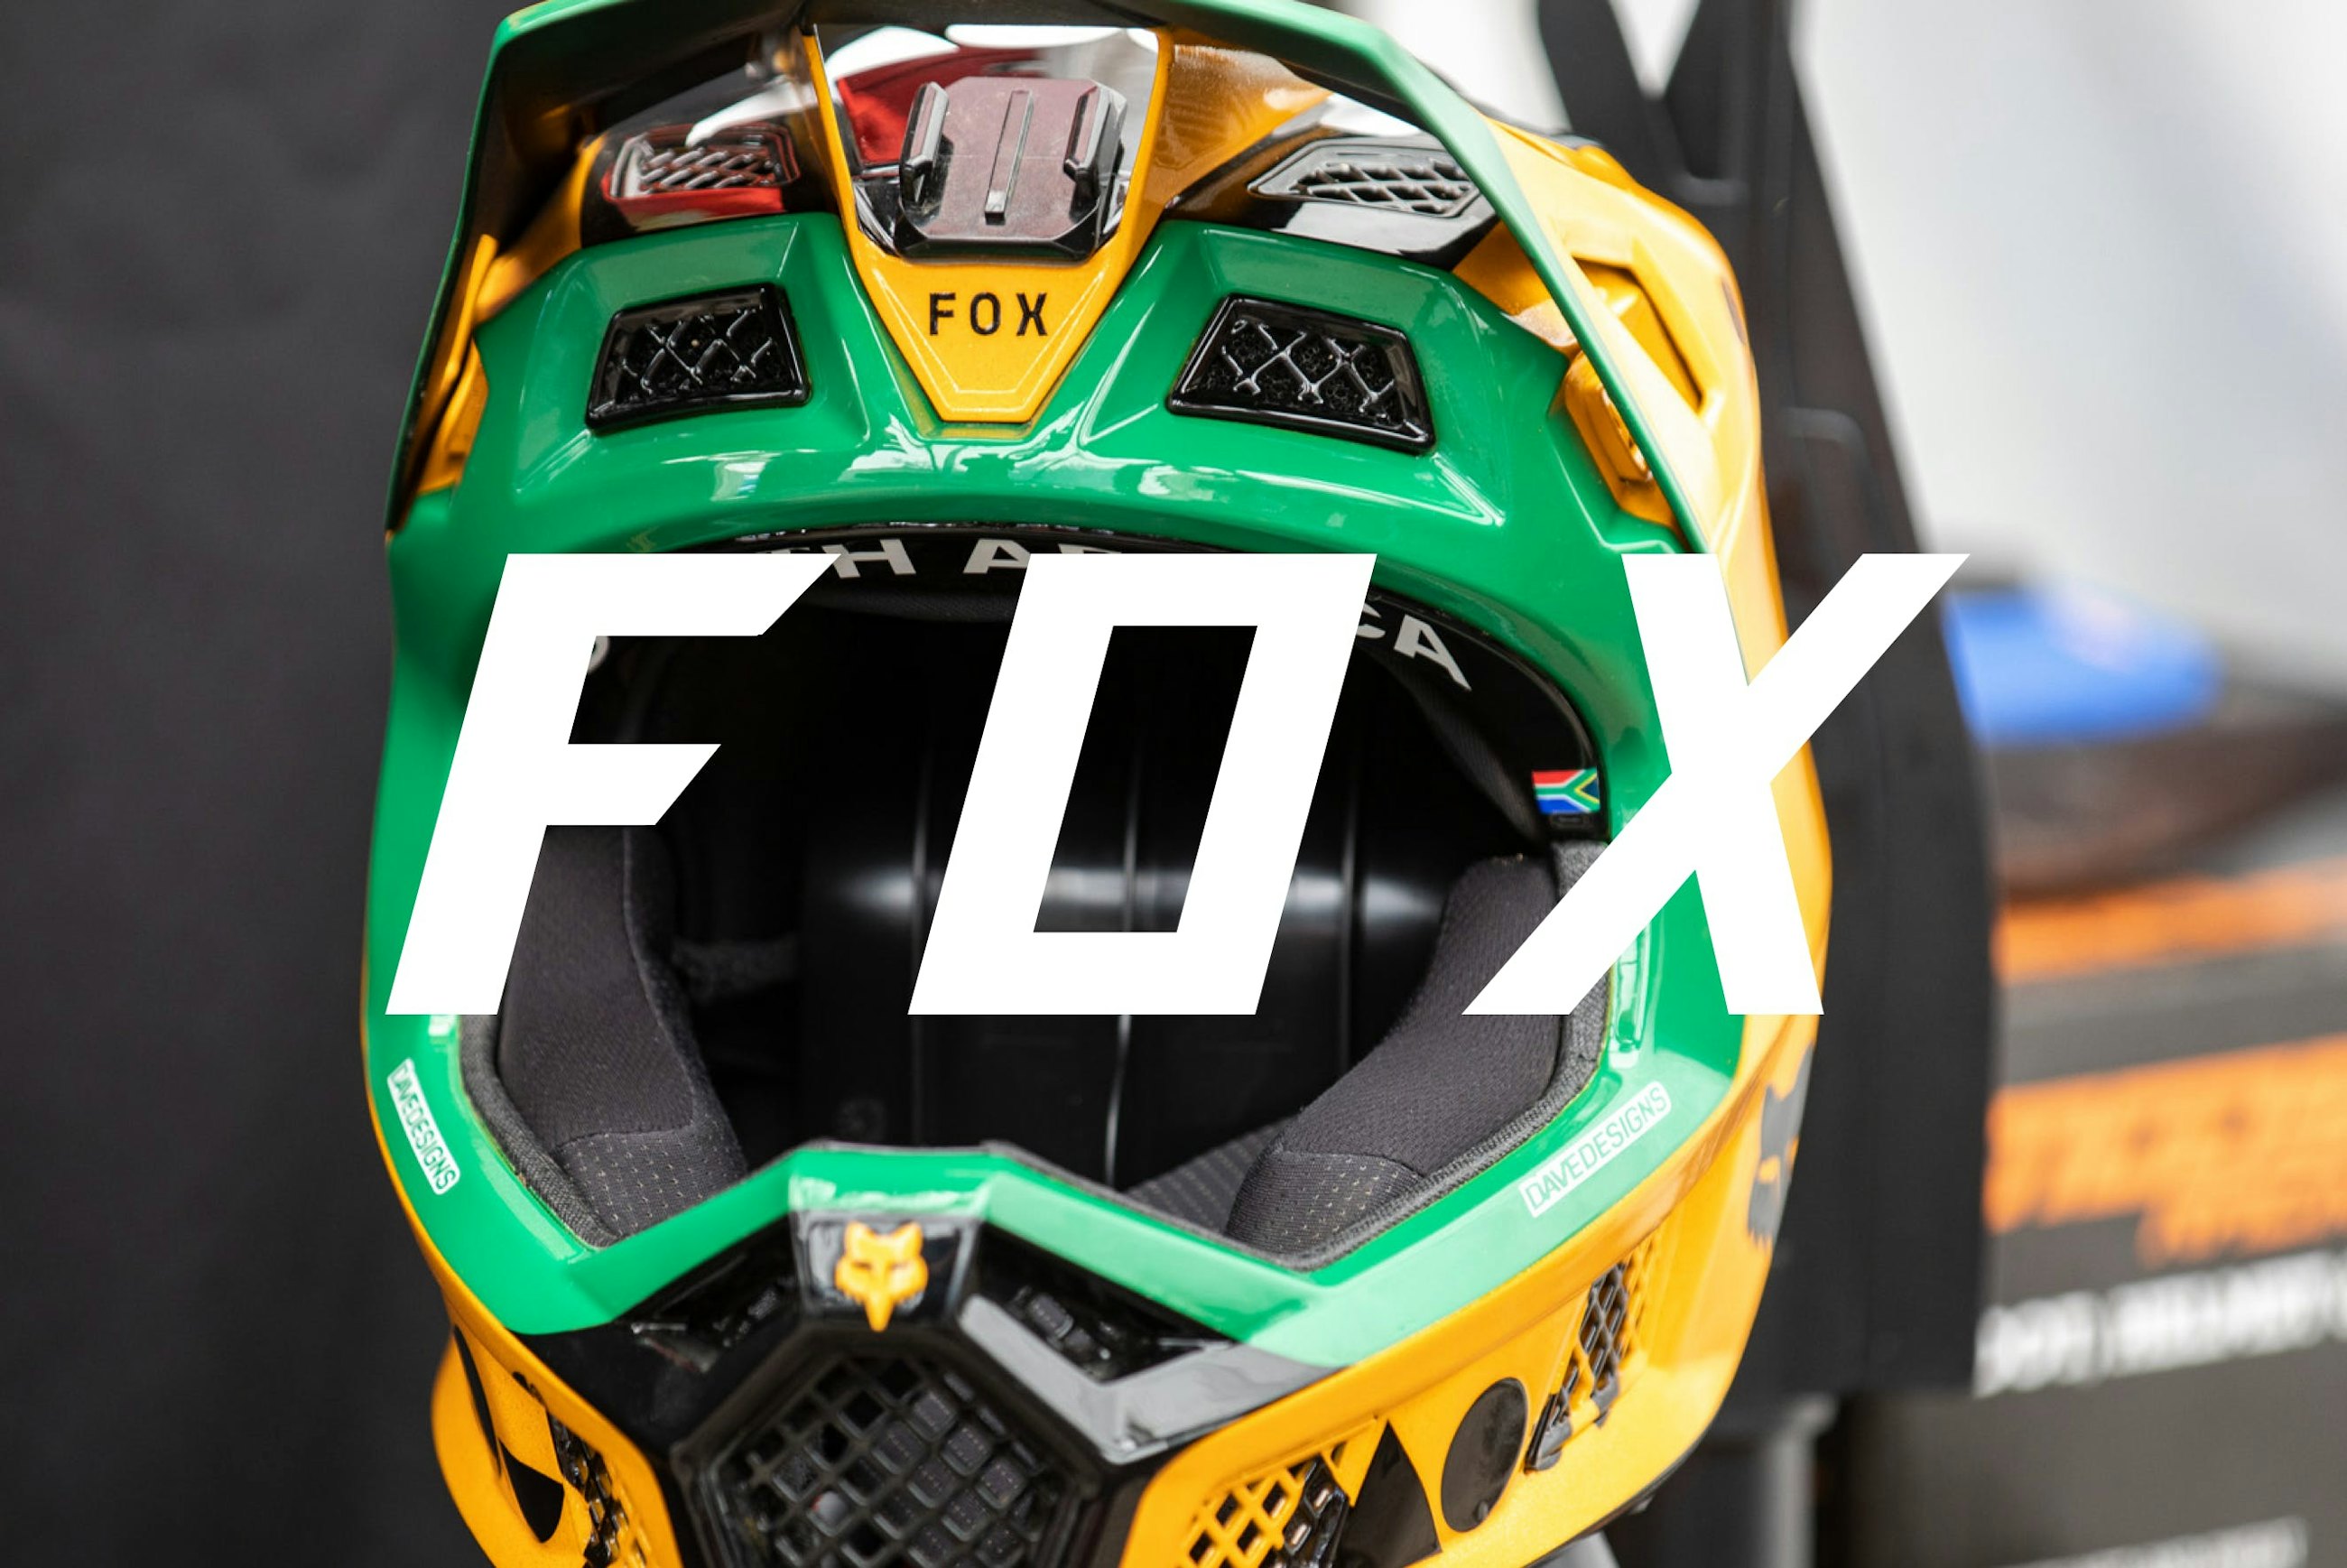 Fox Racing
